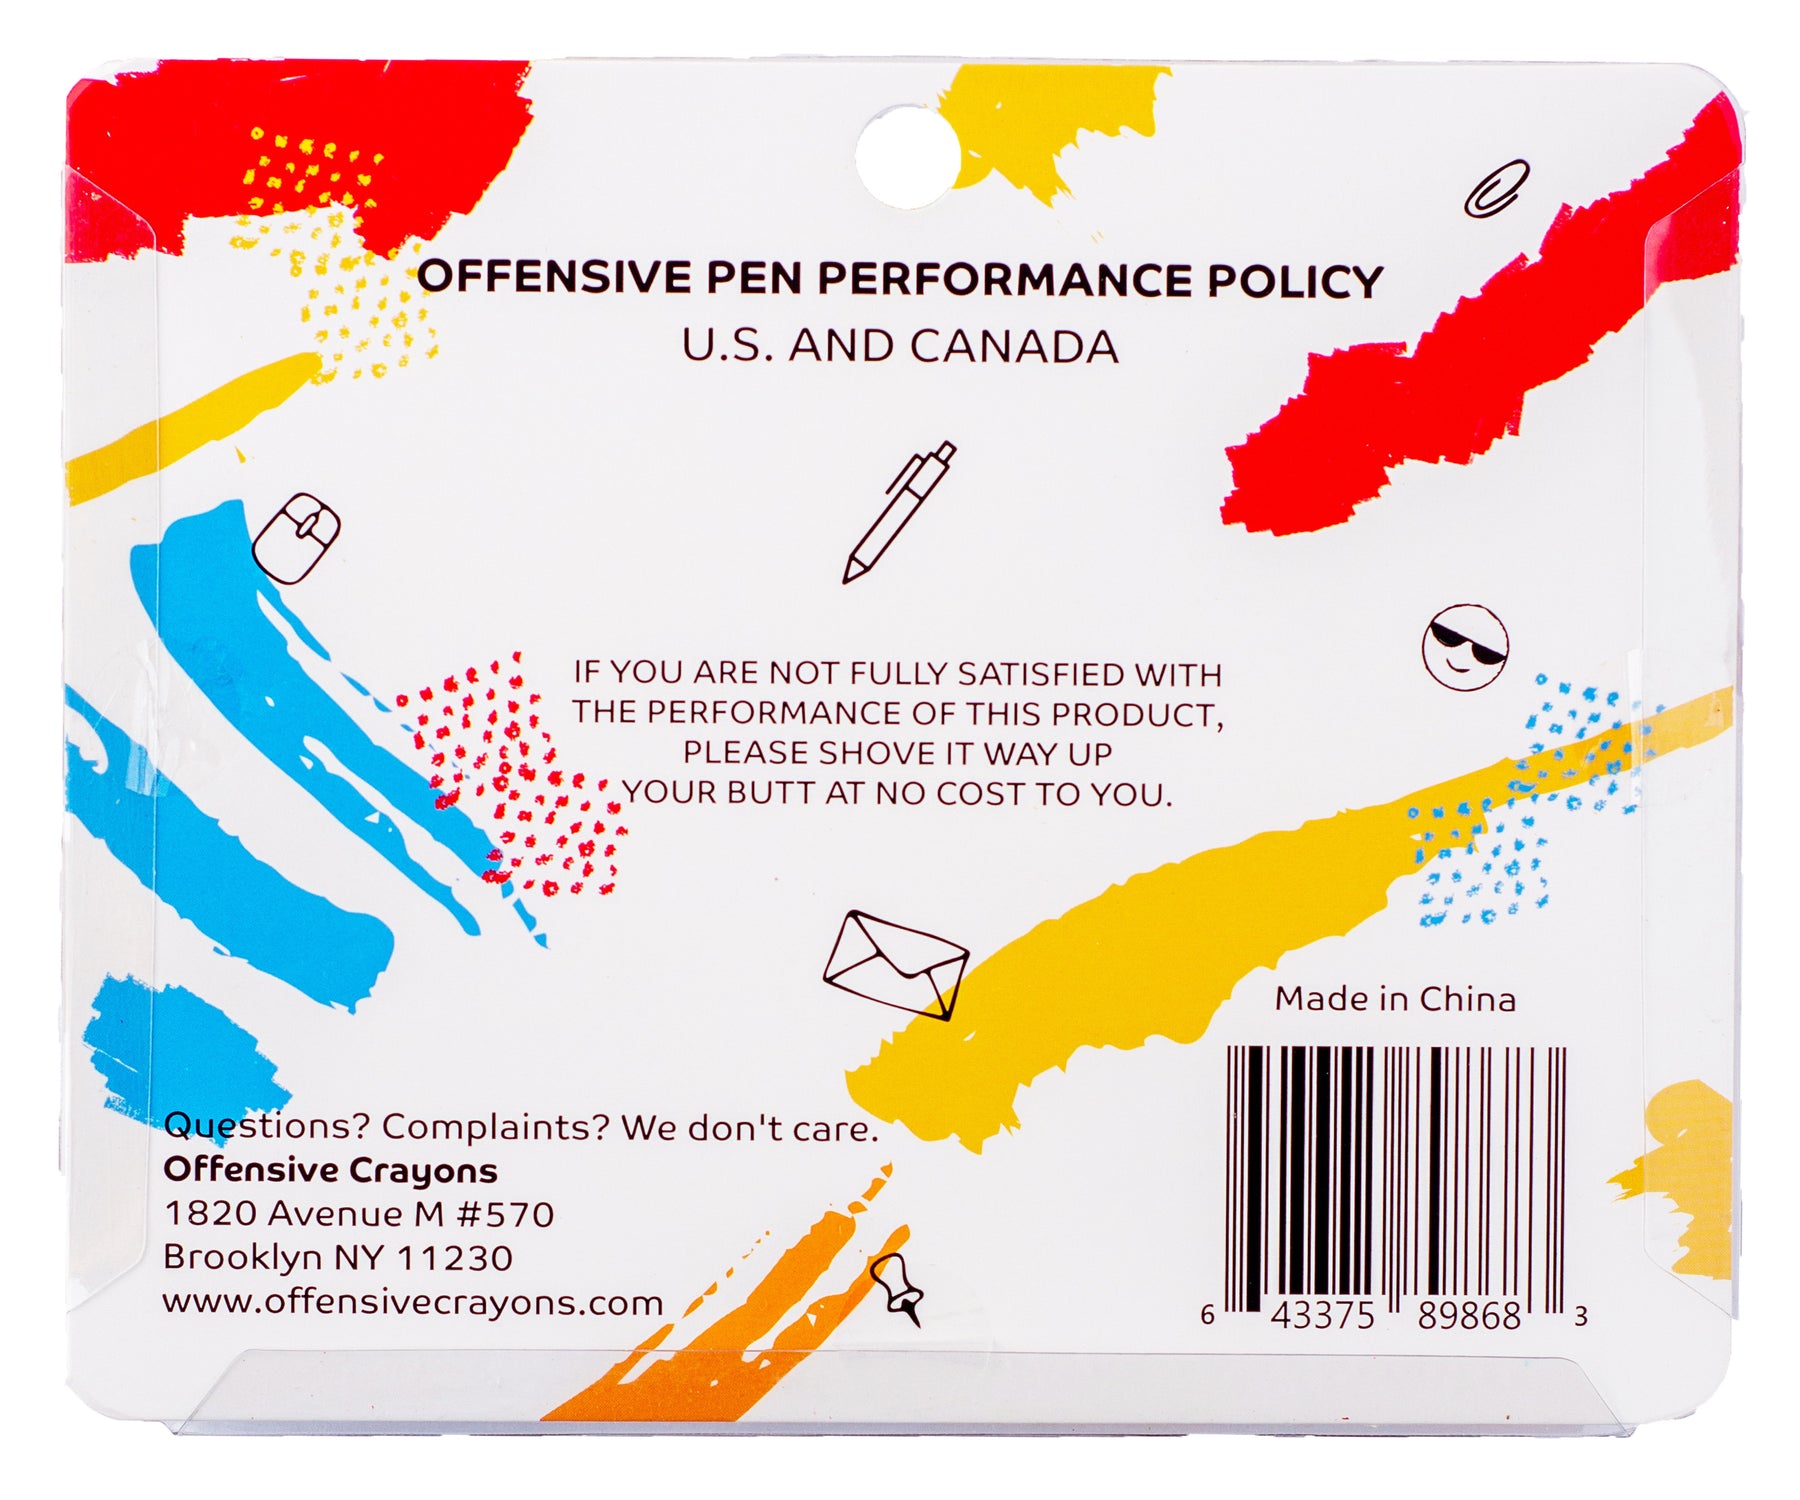 Pen15 Offensive Office Supplies - Dog People Pens – Standard Goods